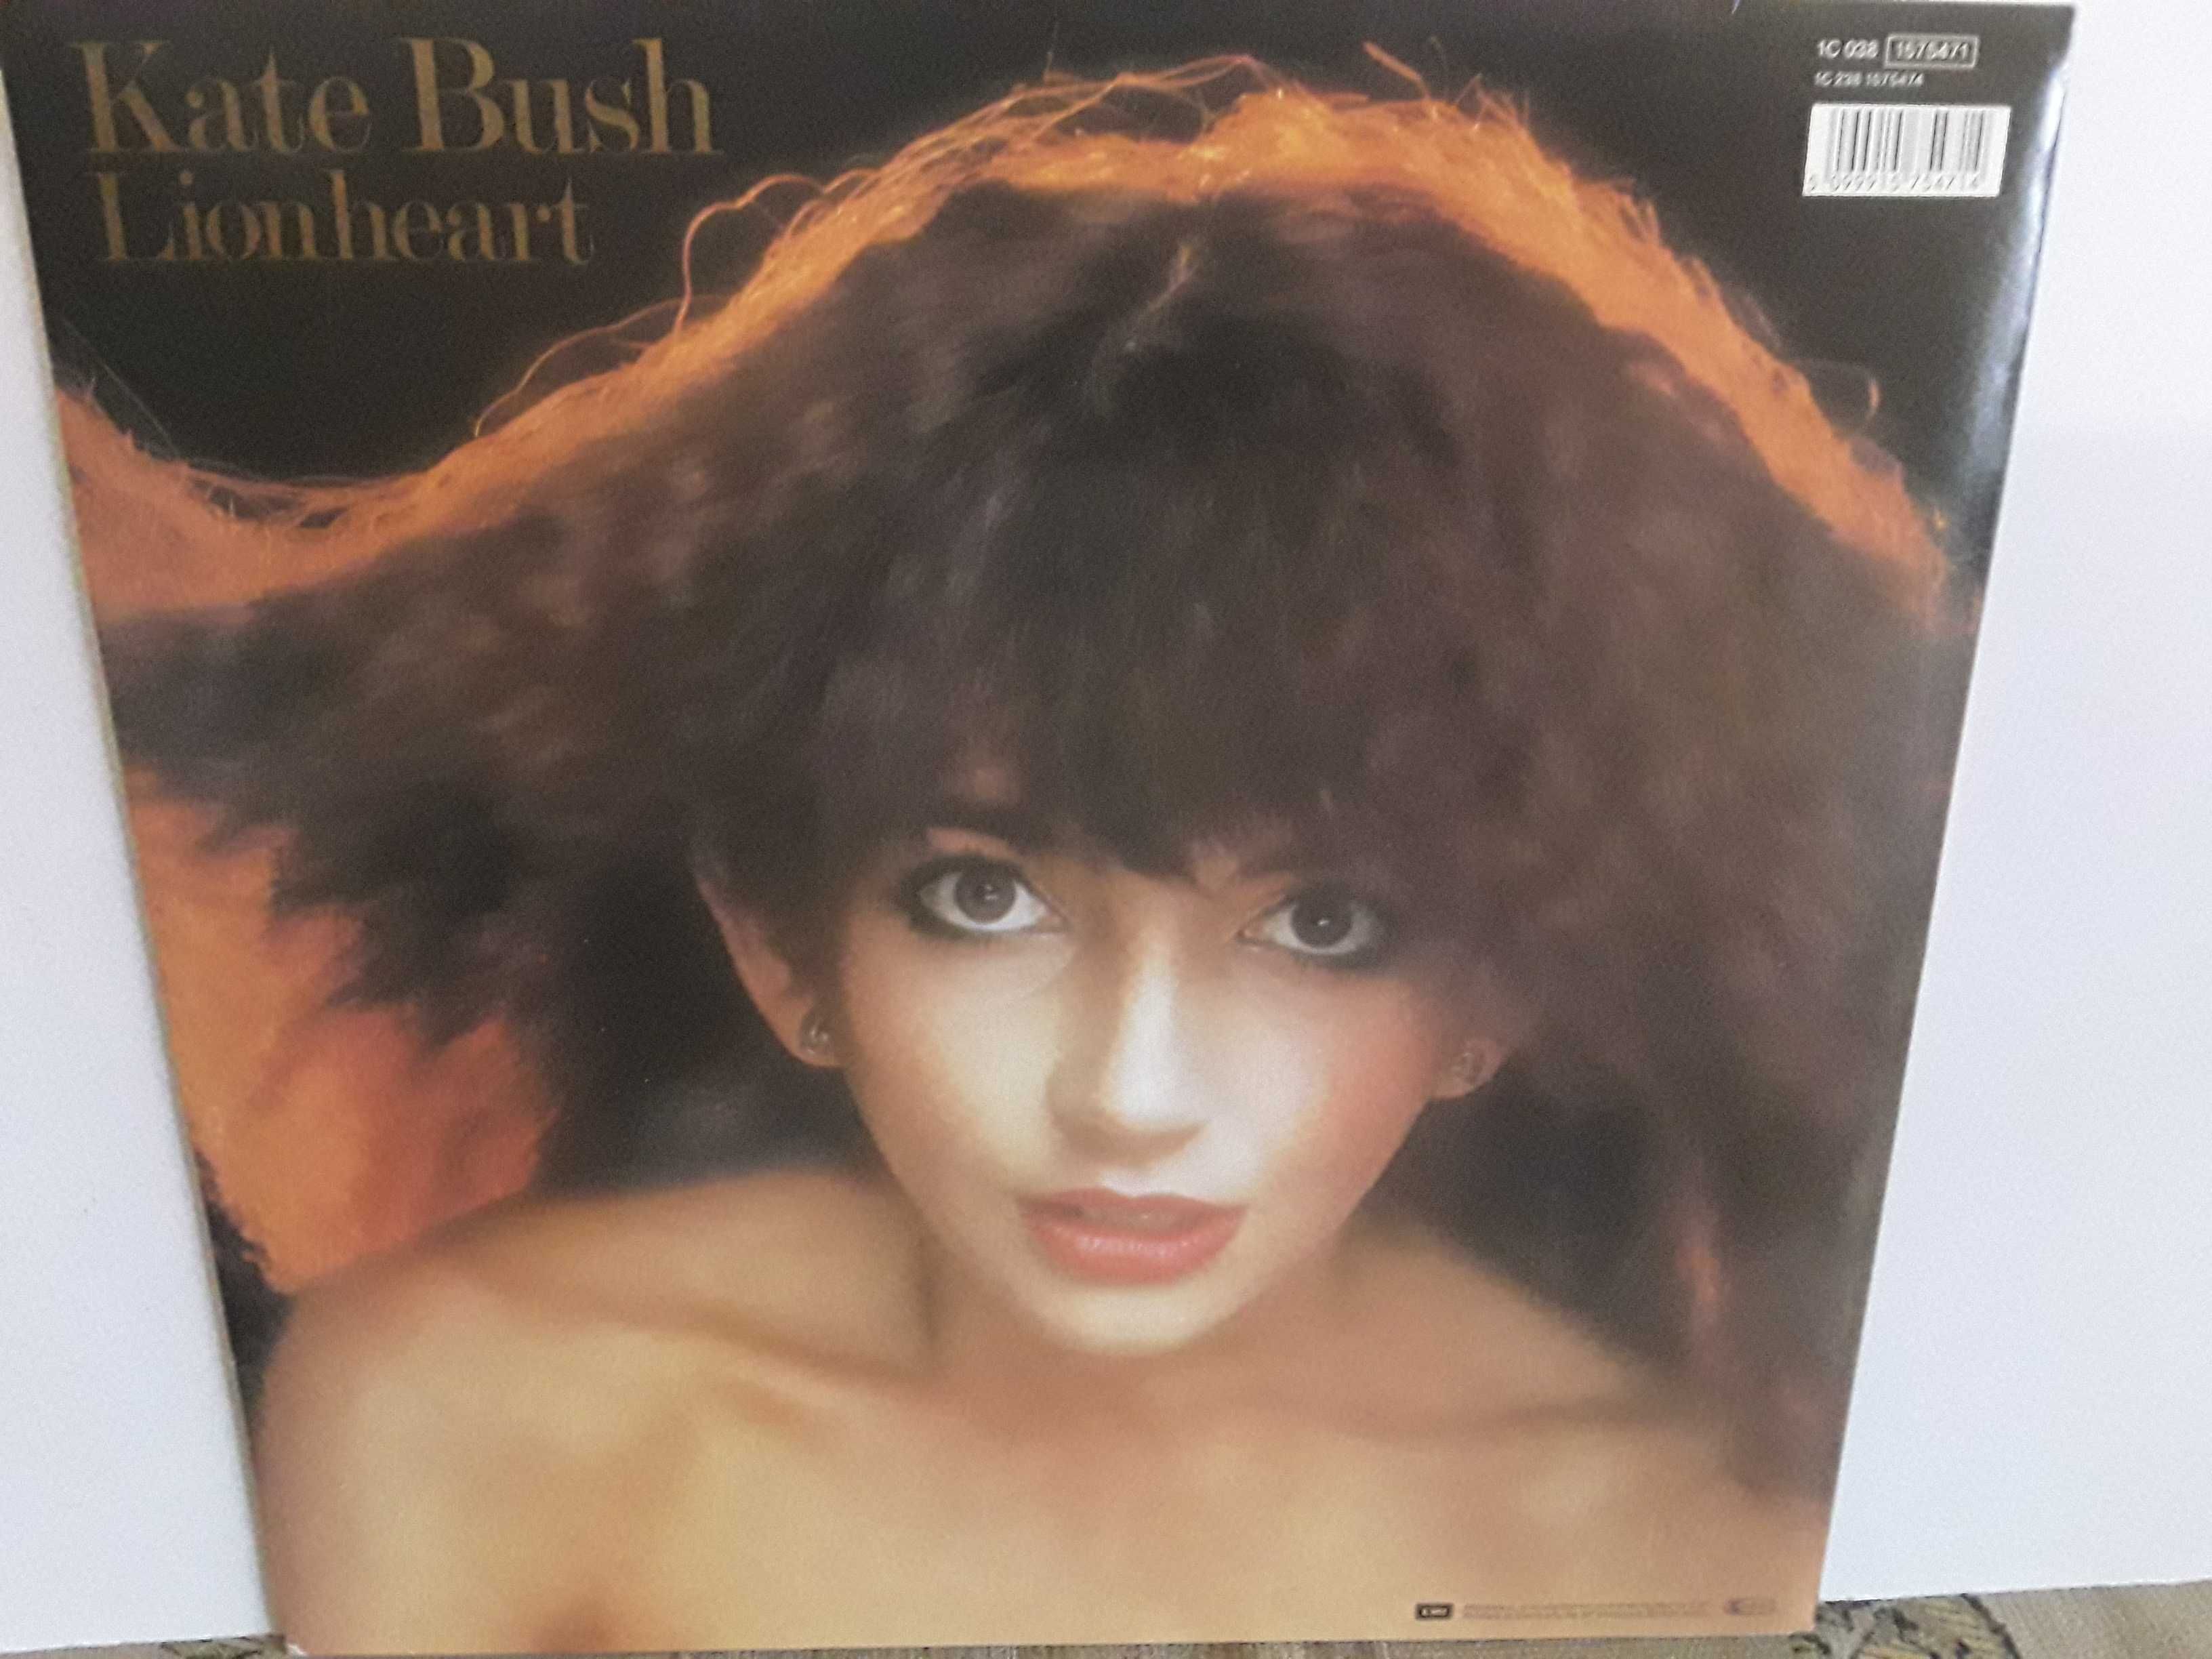 Виниловая пластинка  Kate Bush  Lionheart  1978 г.